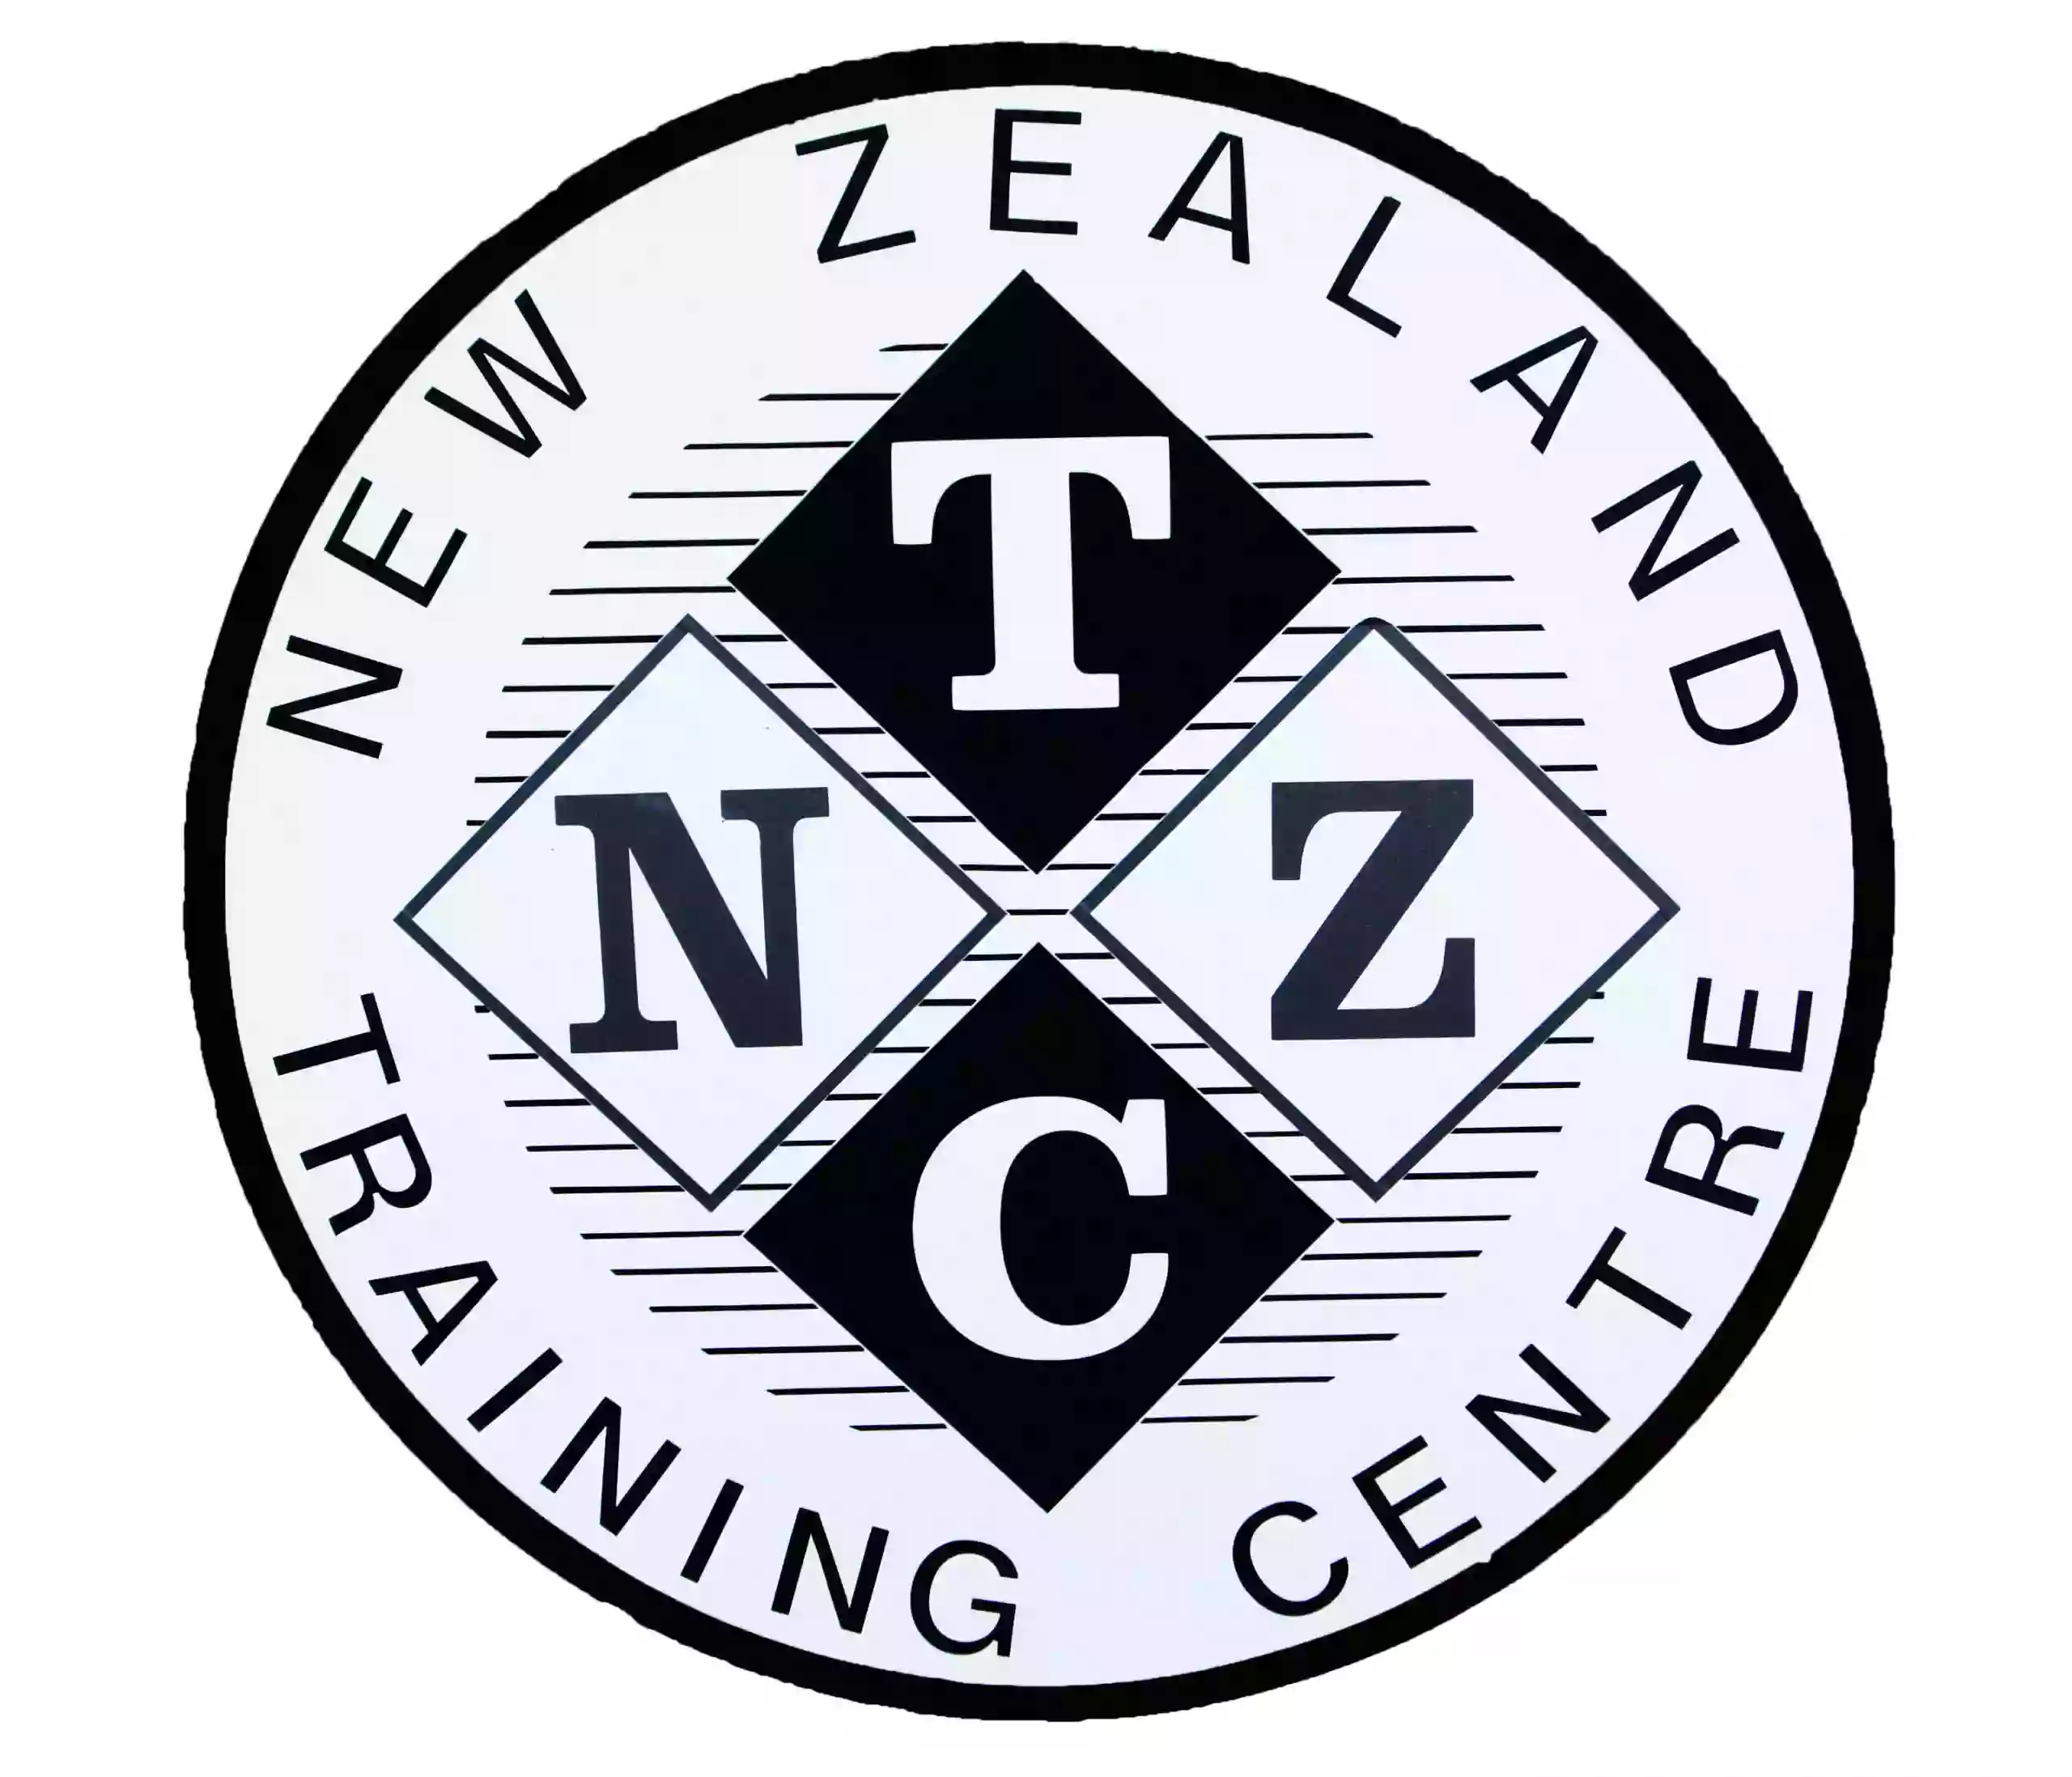 NZ Training Centre